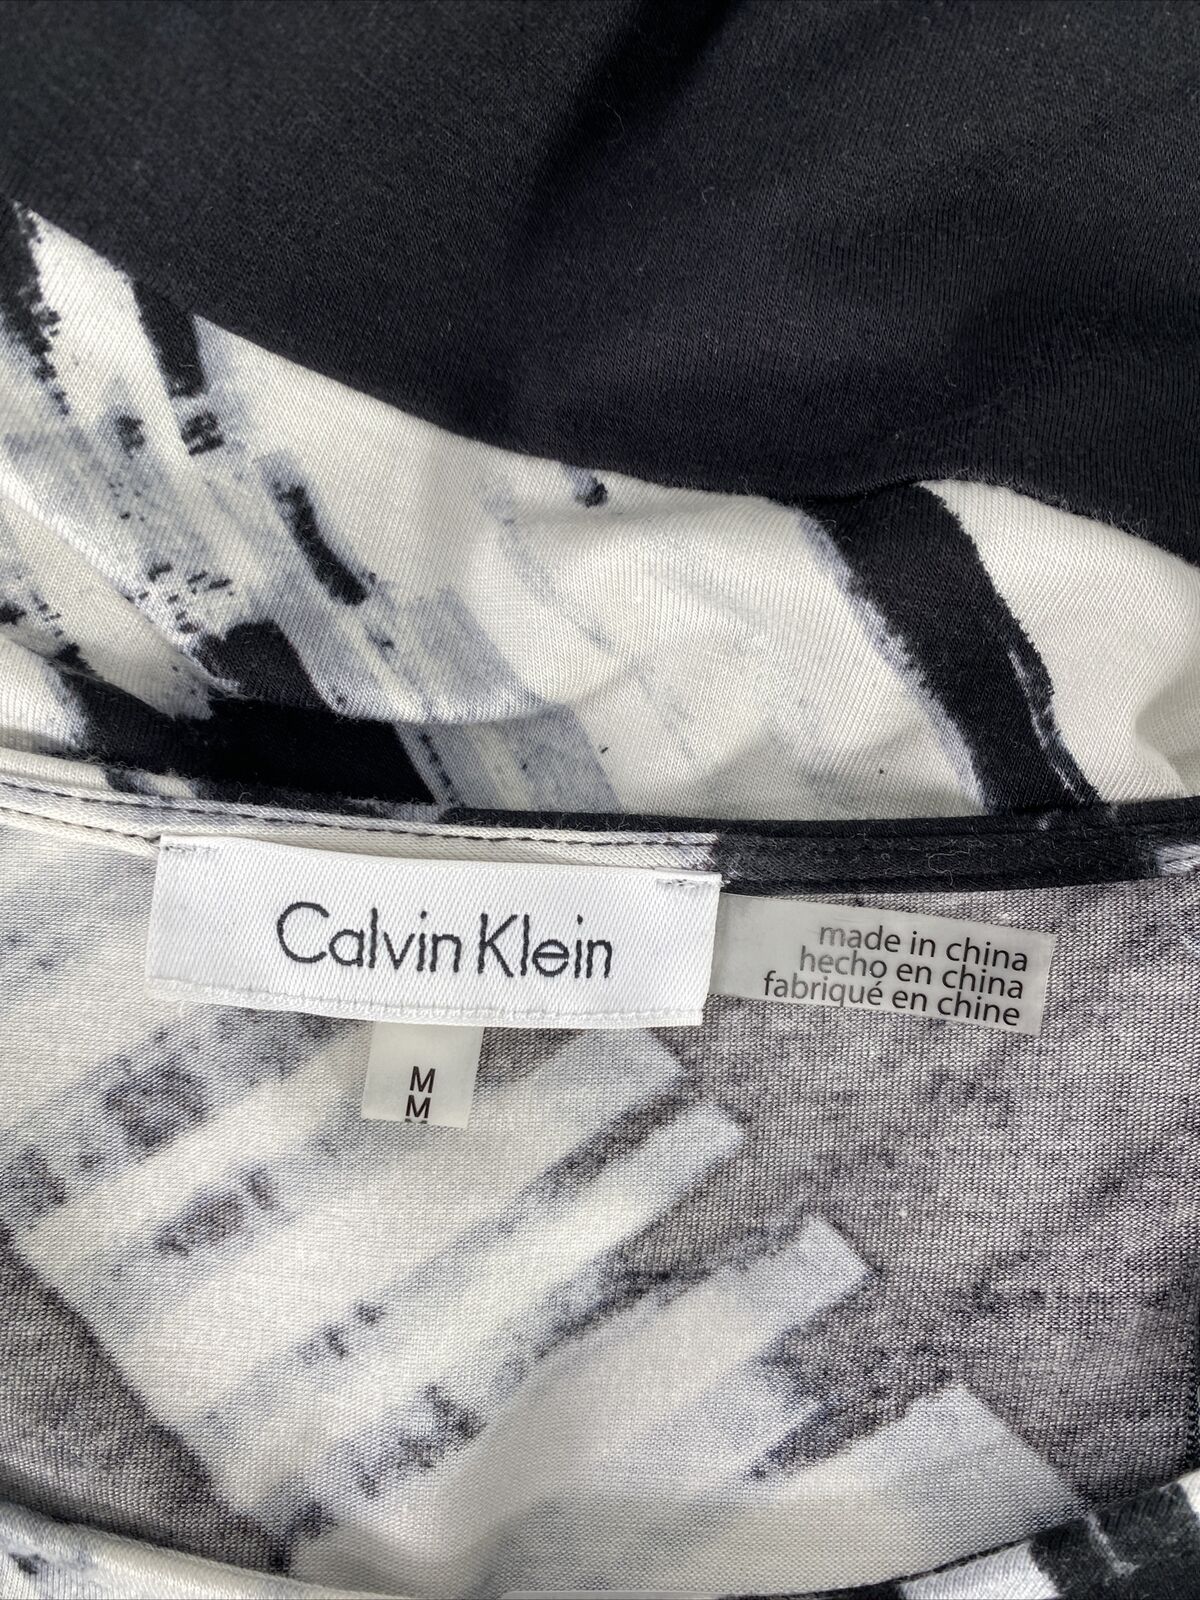 Calvin Klein Blusa tipo túnica de manga larga negra/blanca para mujer - M